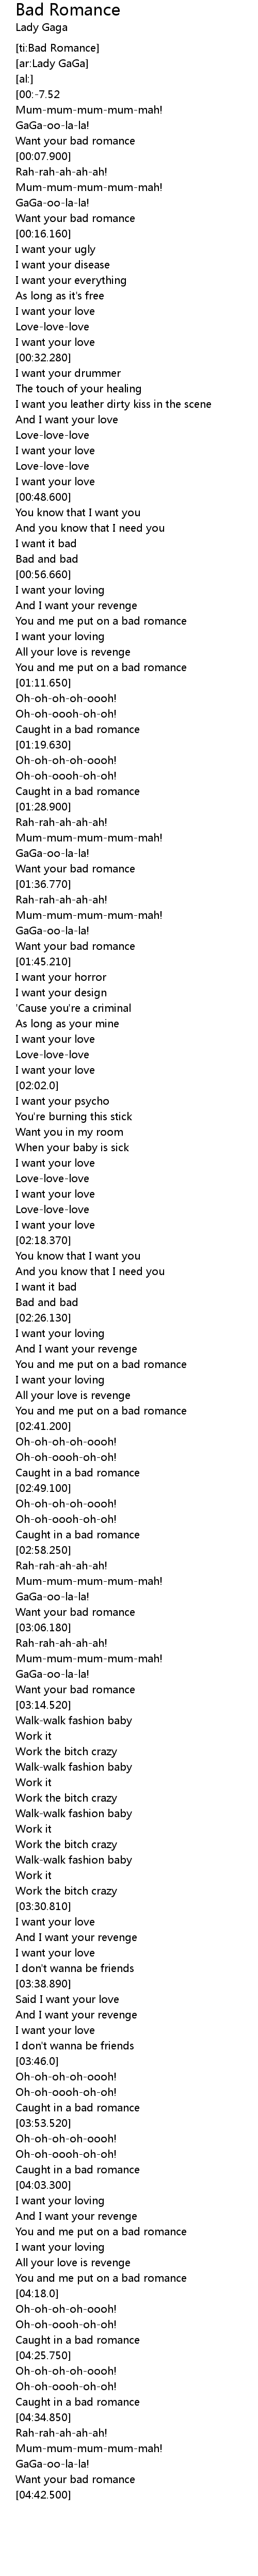 Romance lyrics gaga bad lady LADY GAGA